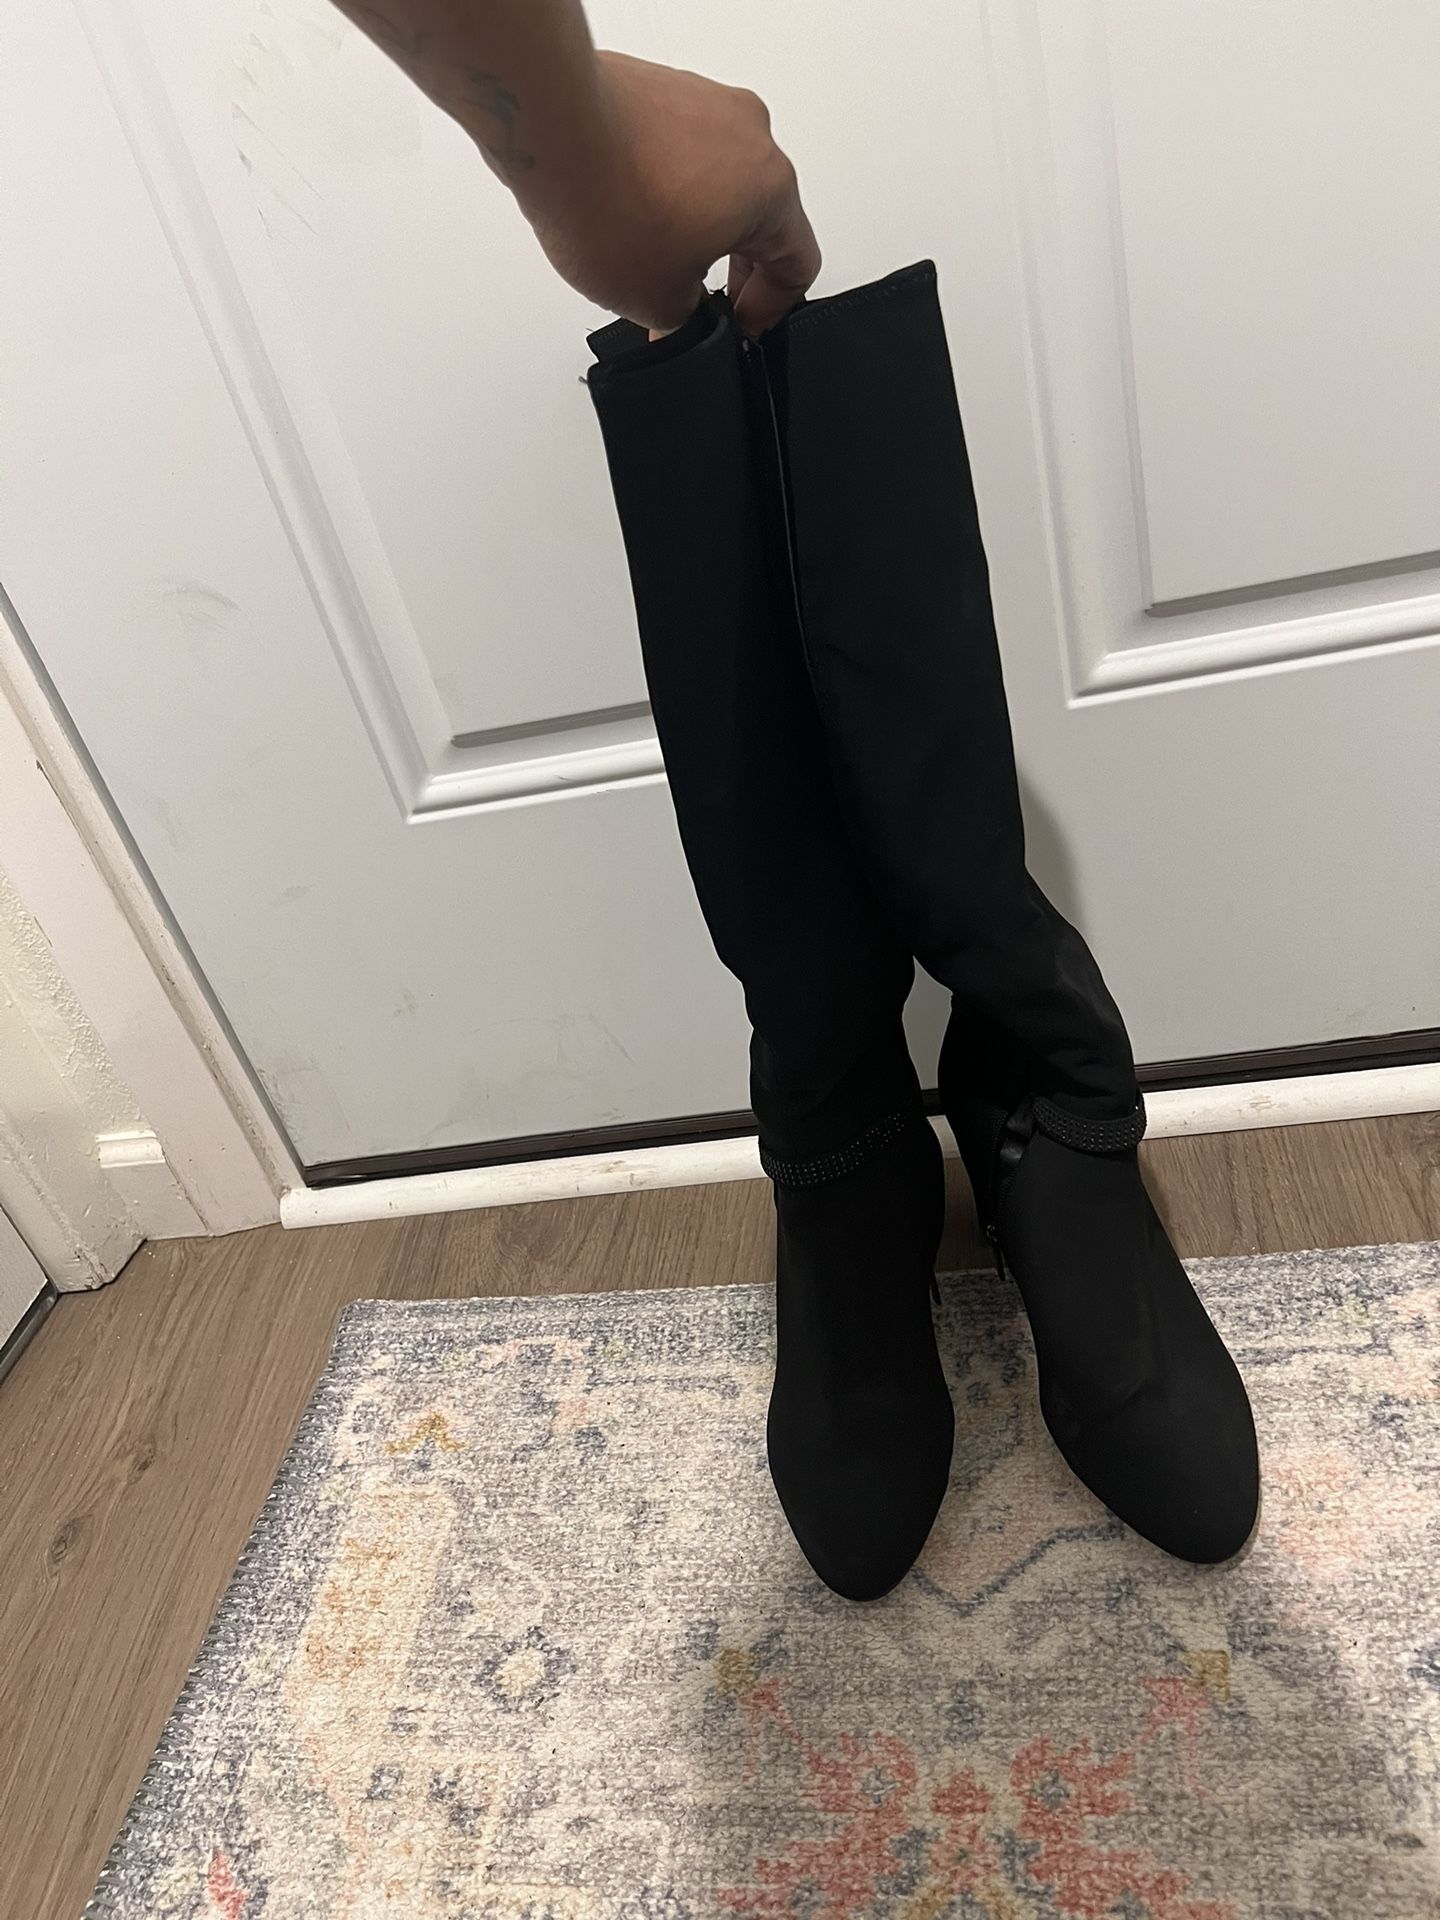 Black Knee High Boots 